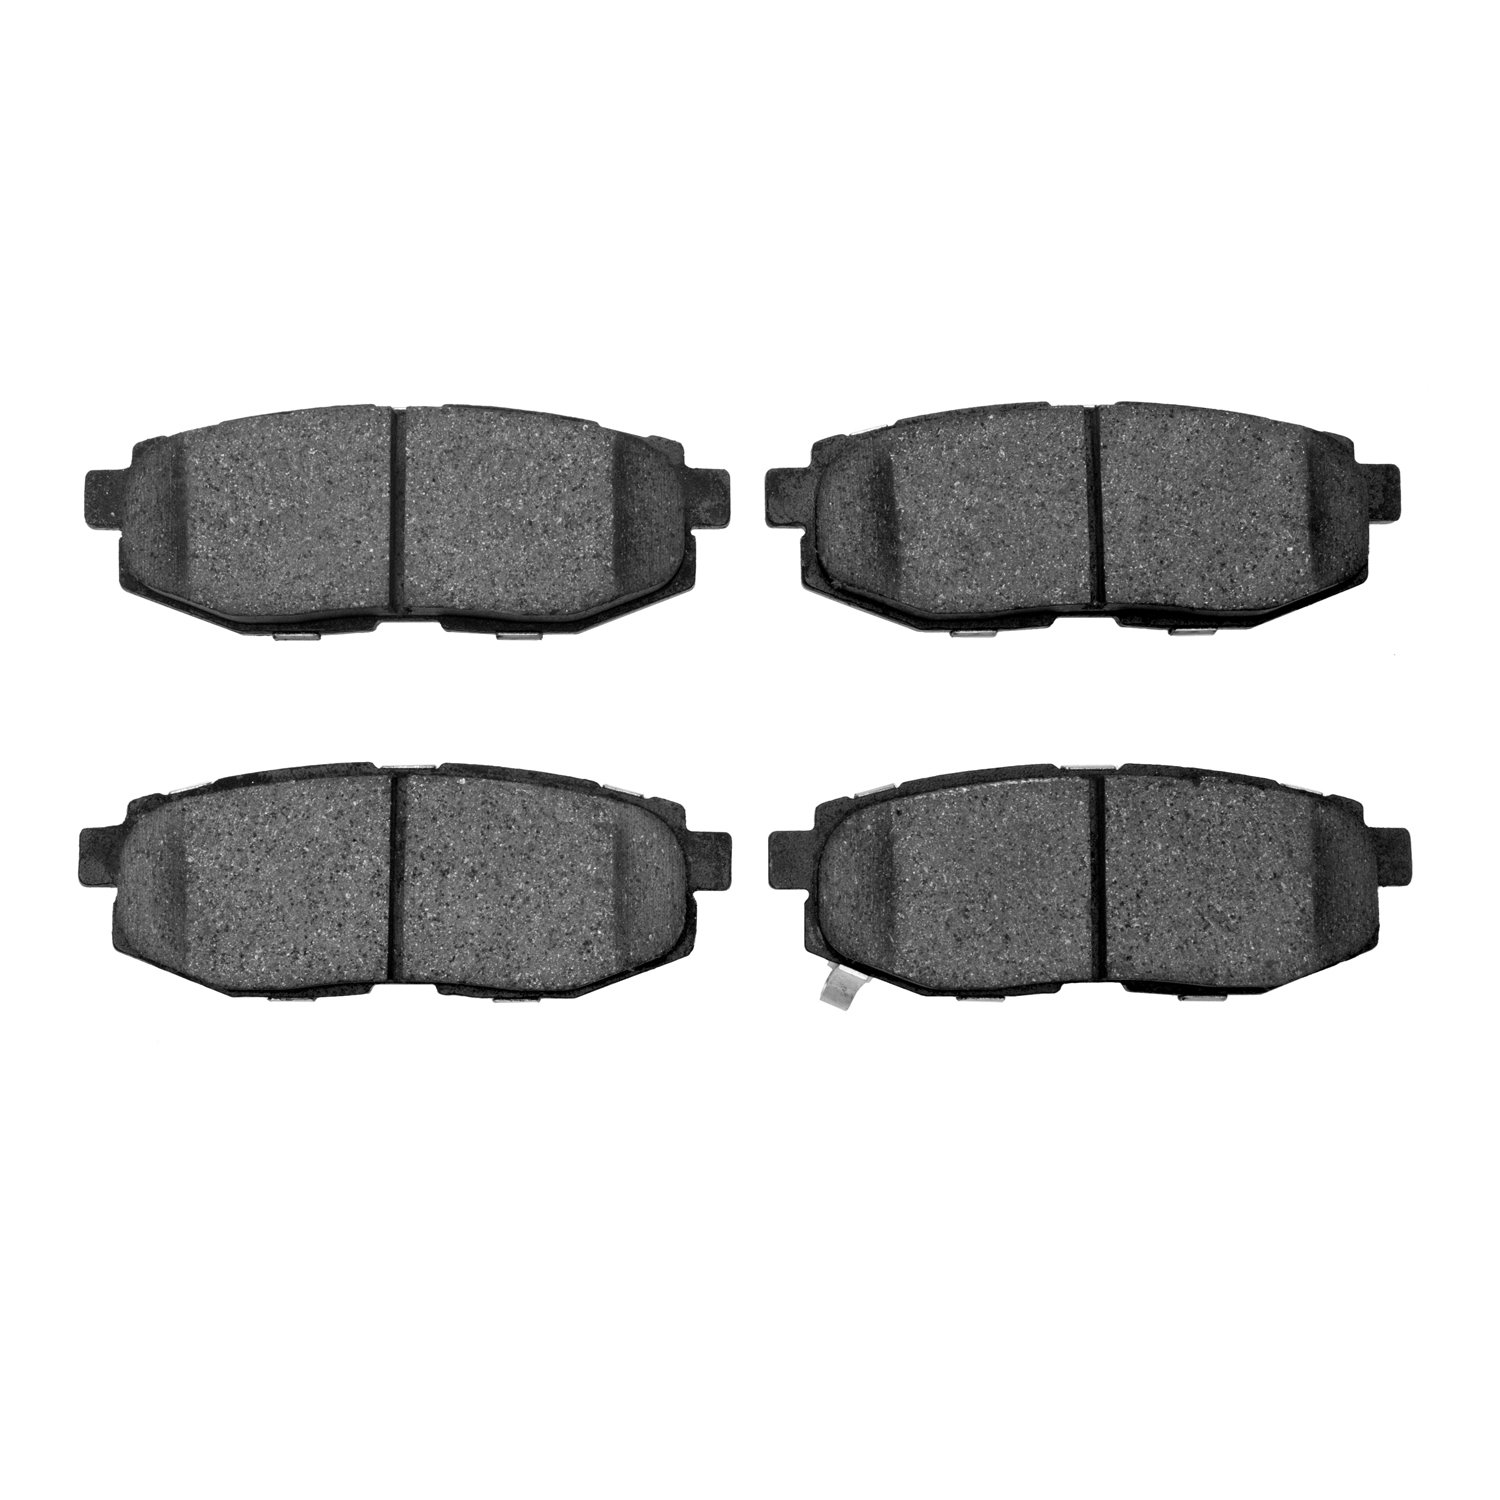 1310-1124-00 3000-Series Ceramic Brake Pads, Fits Select Multiple Makes/Models, Position: Rear